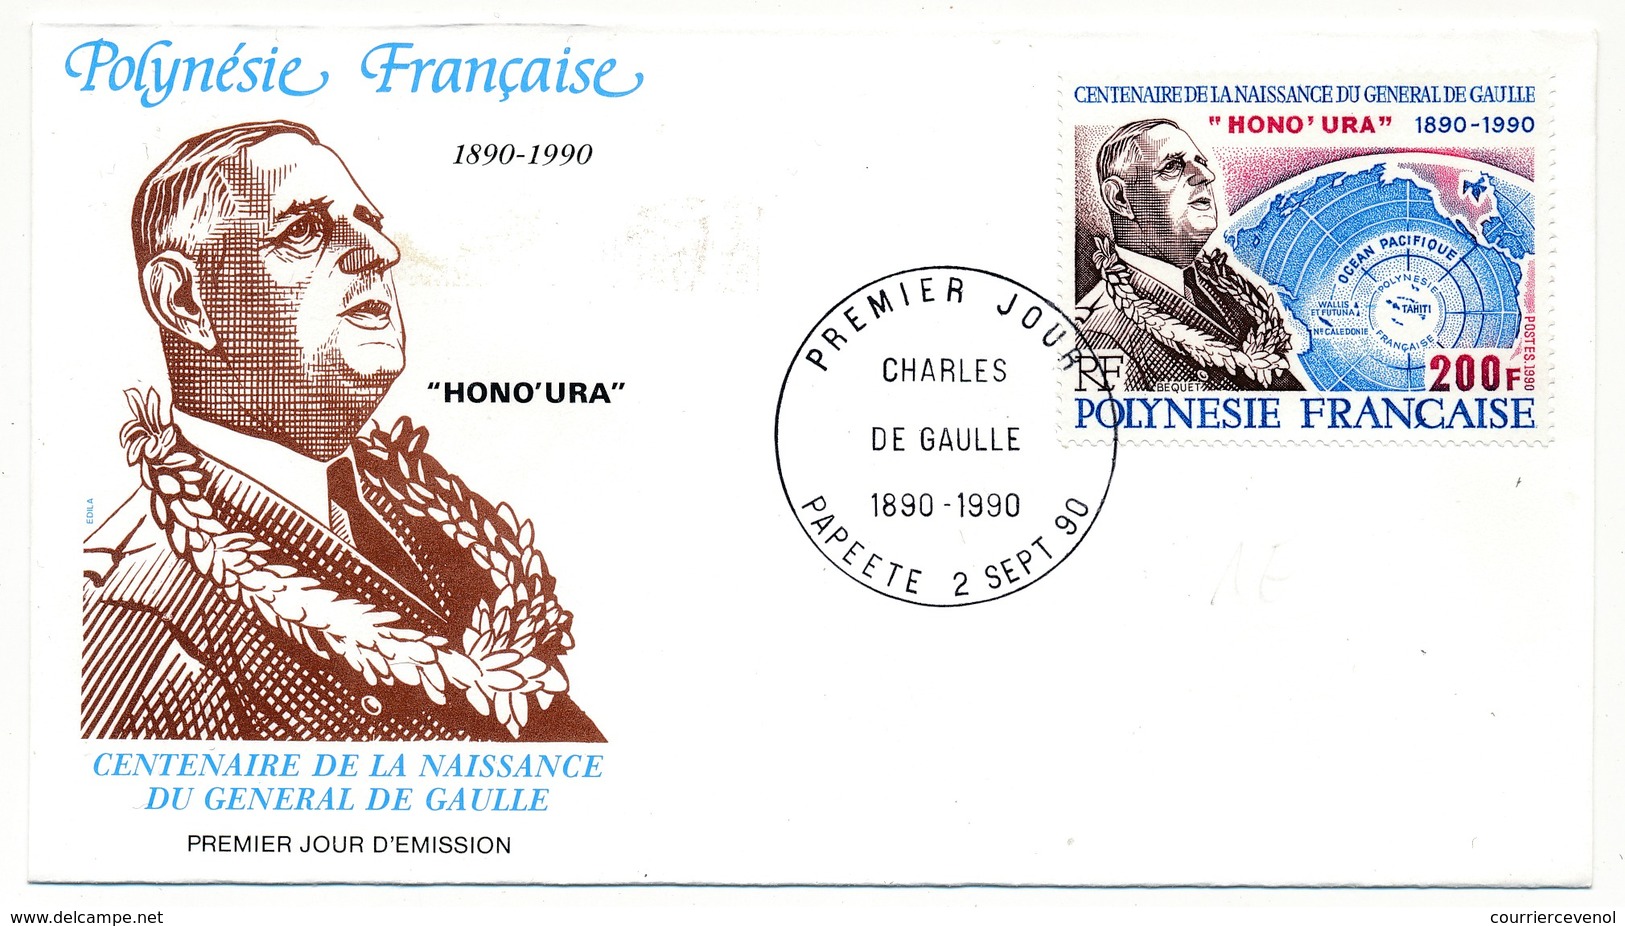 POLYNESIE FRANCAISE -  Enveloppe FDC - Charles De Gaulle - PAPEETE 2/09/1990 - De Gaulle (General)